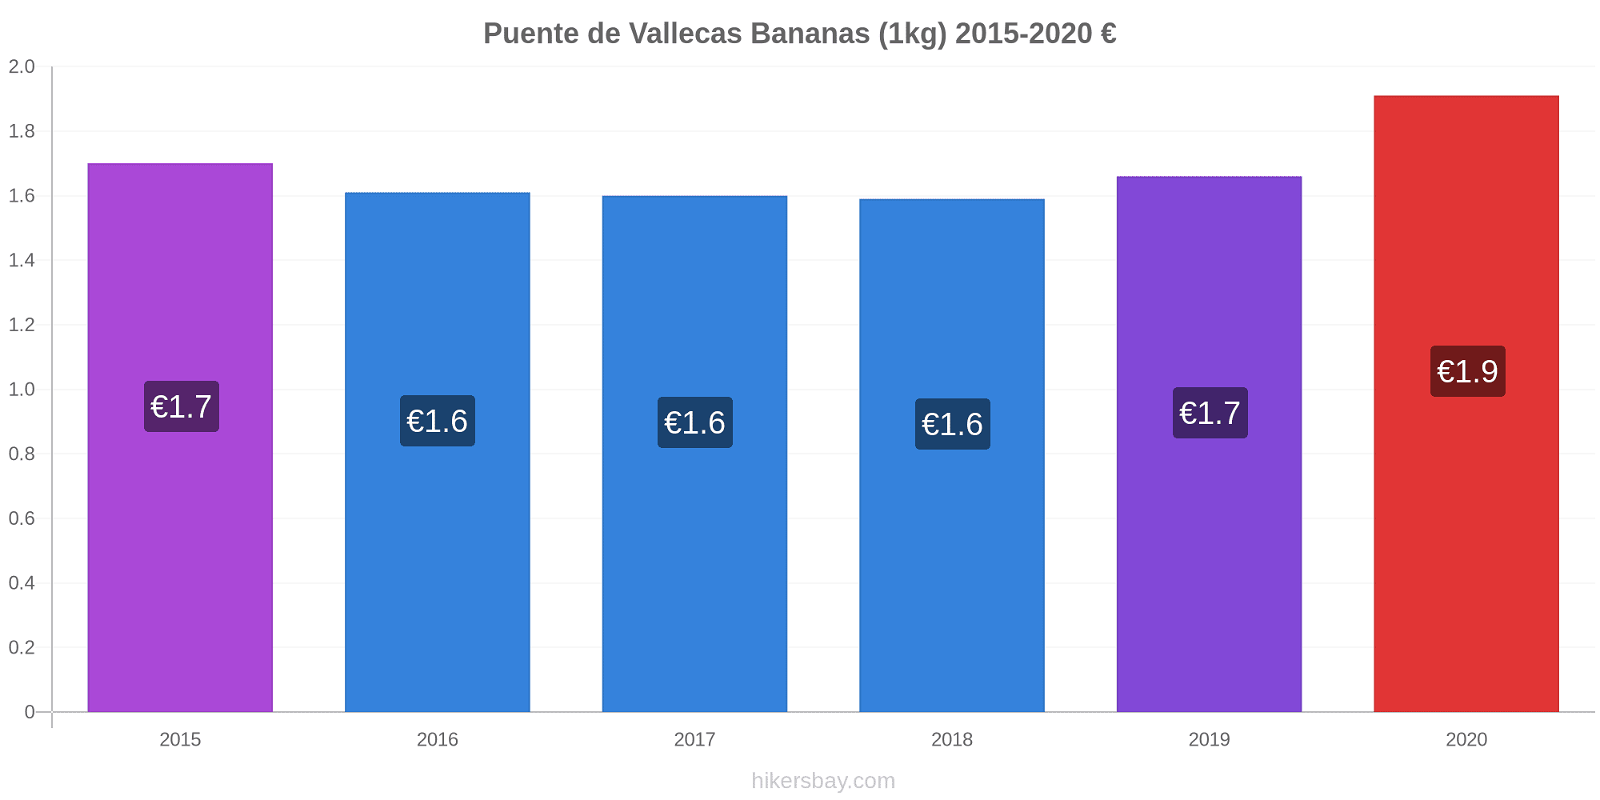 Puente de Vallecas price changes Bananas (1kg) hikersbay.com